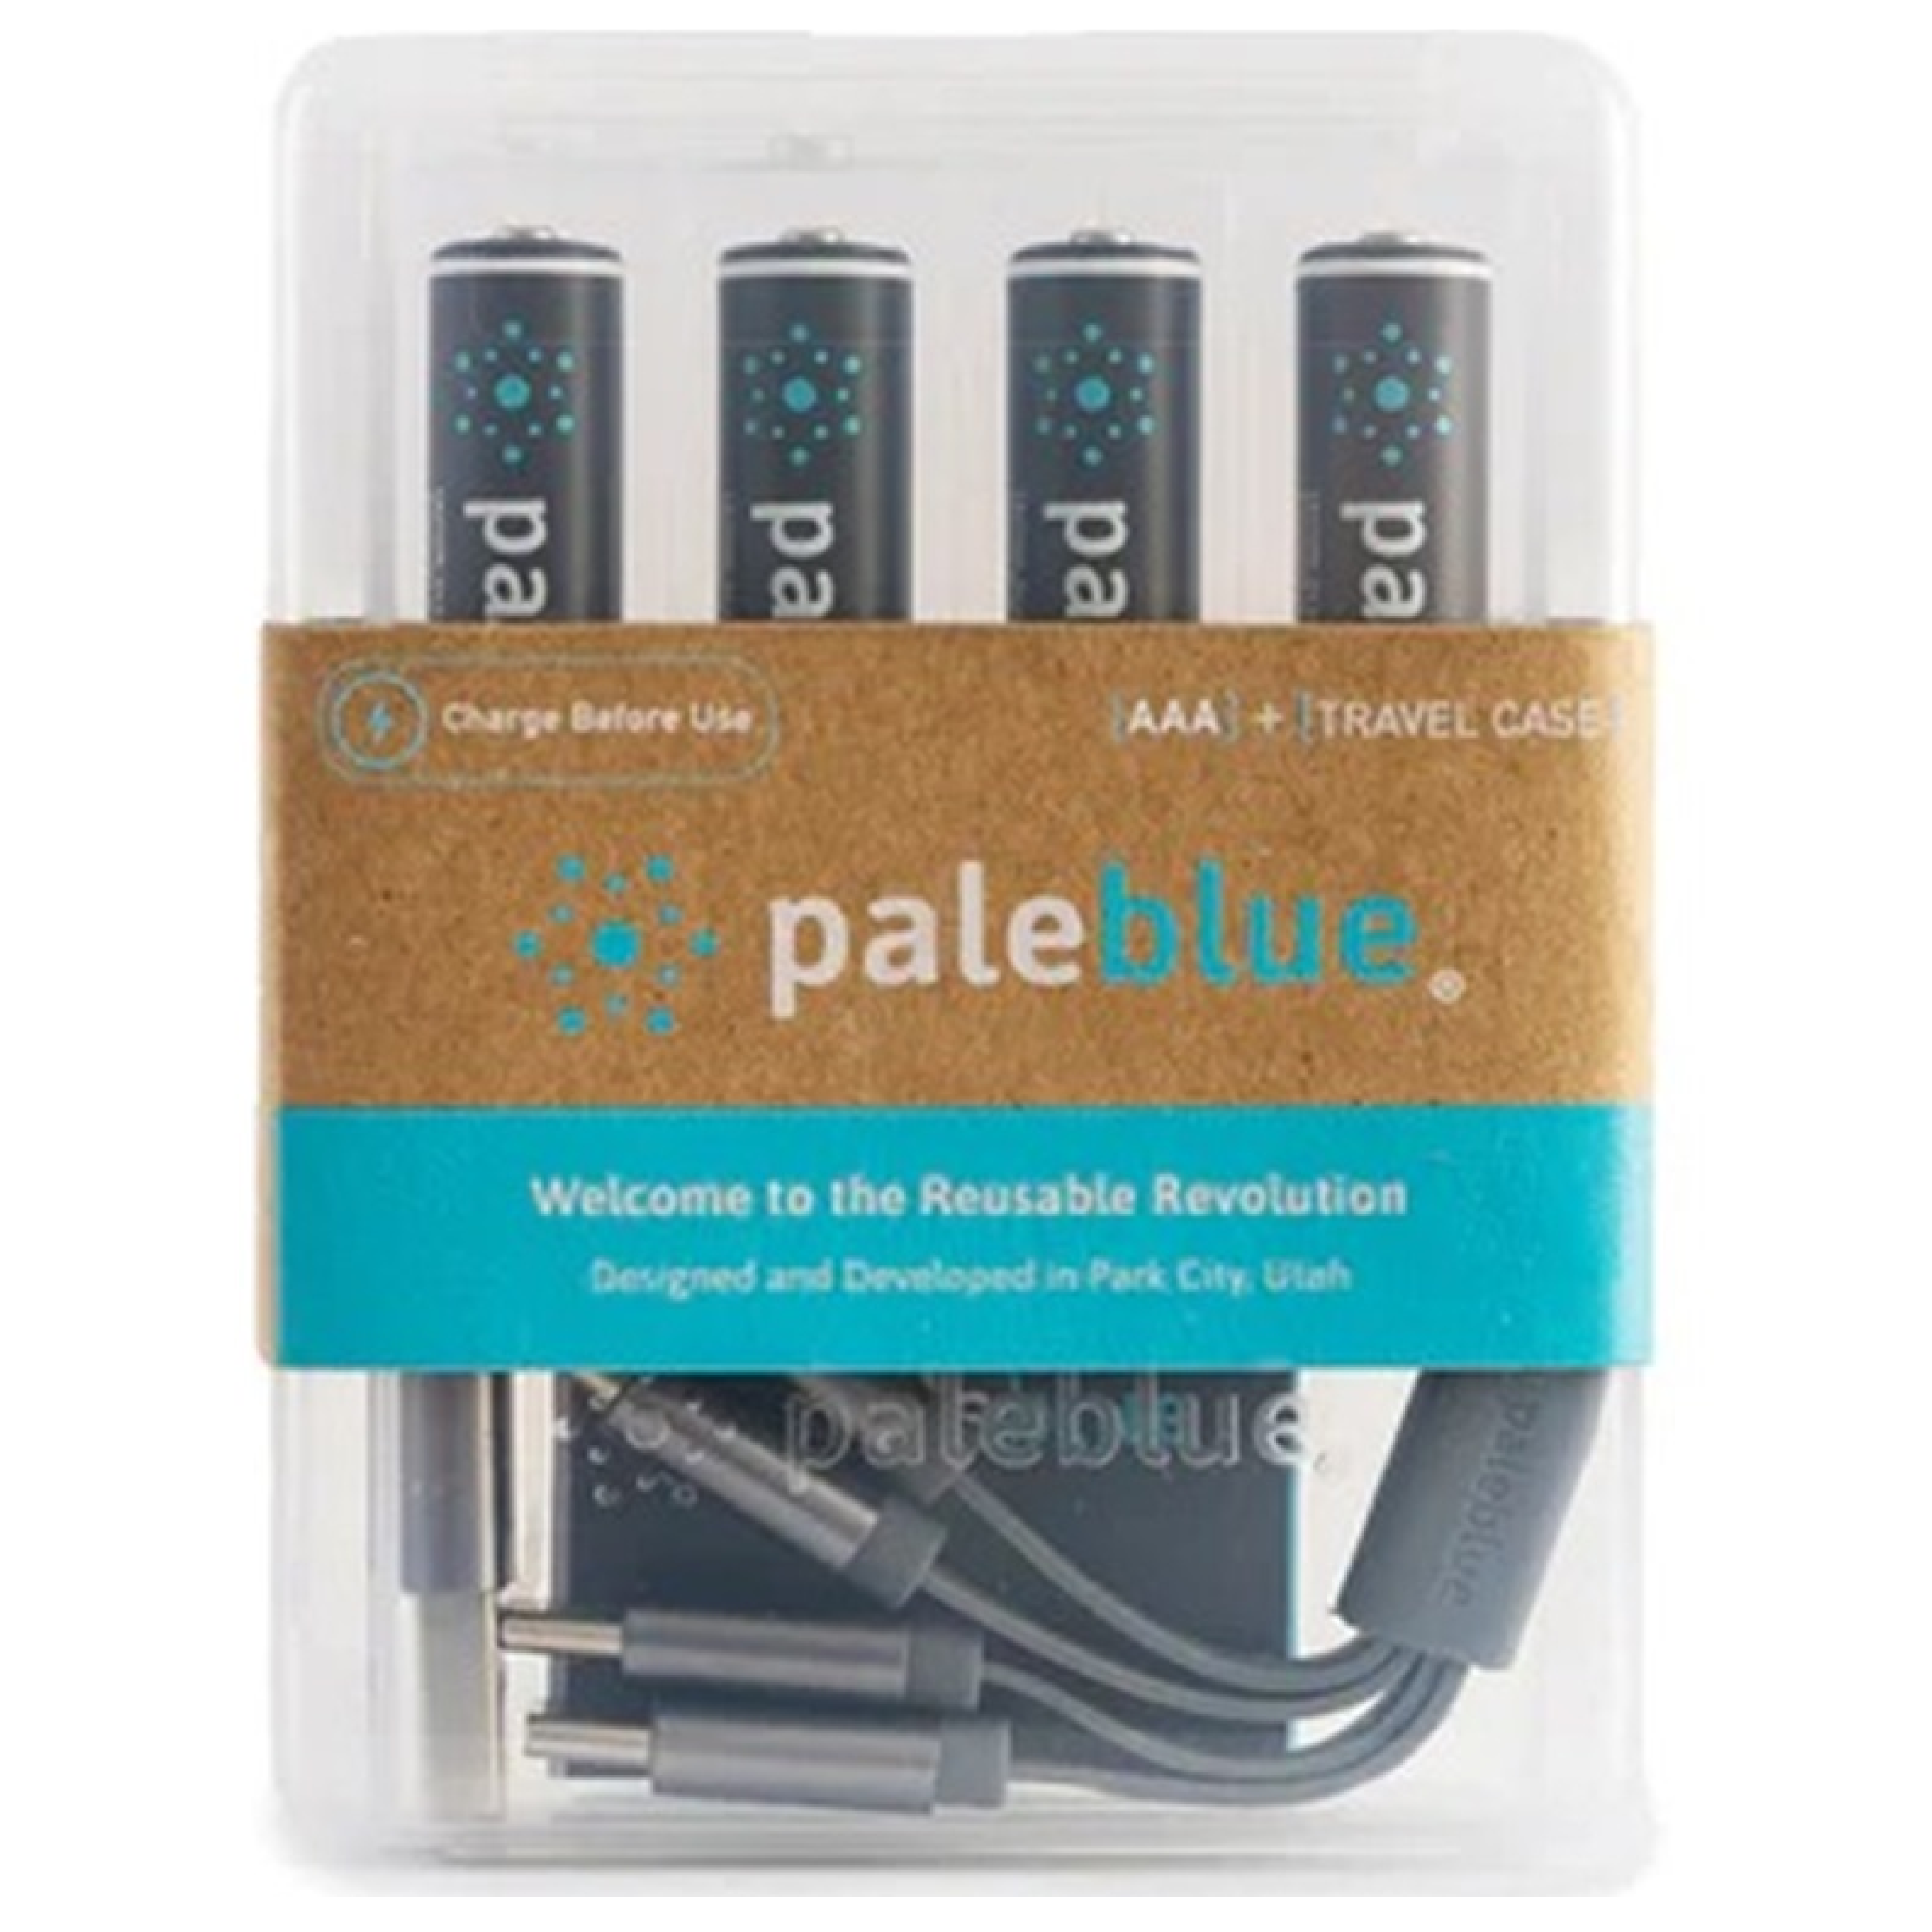 PALEBLUE MICRO-USB Rechargeable AAA LITHIUM BATTERY 750MAH PB-AAA 4PC/SET